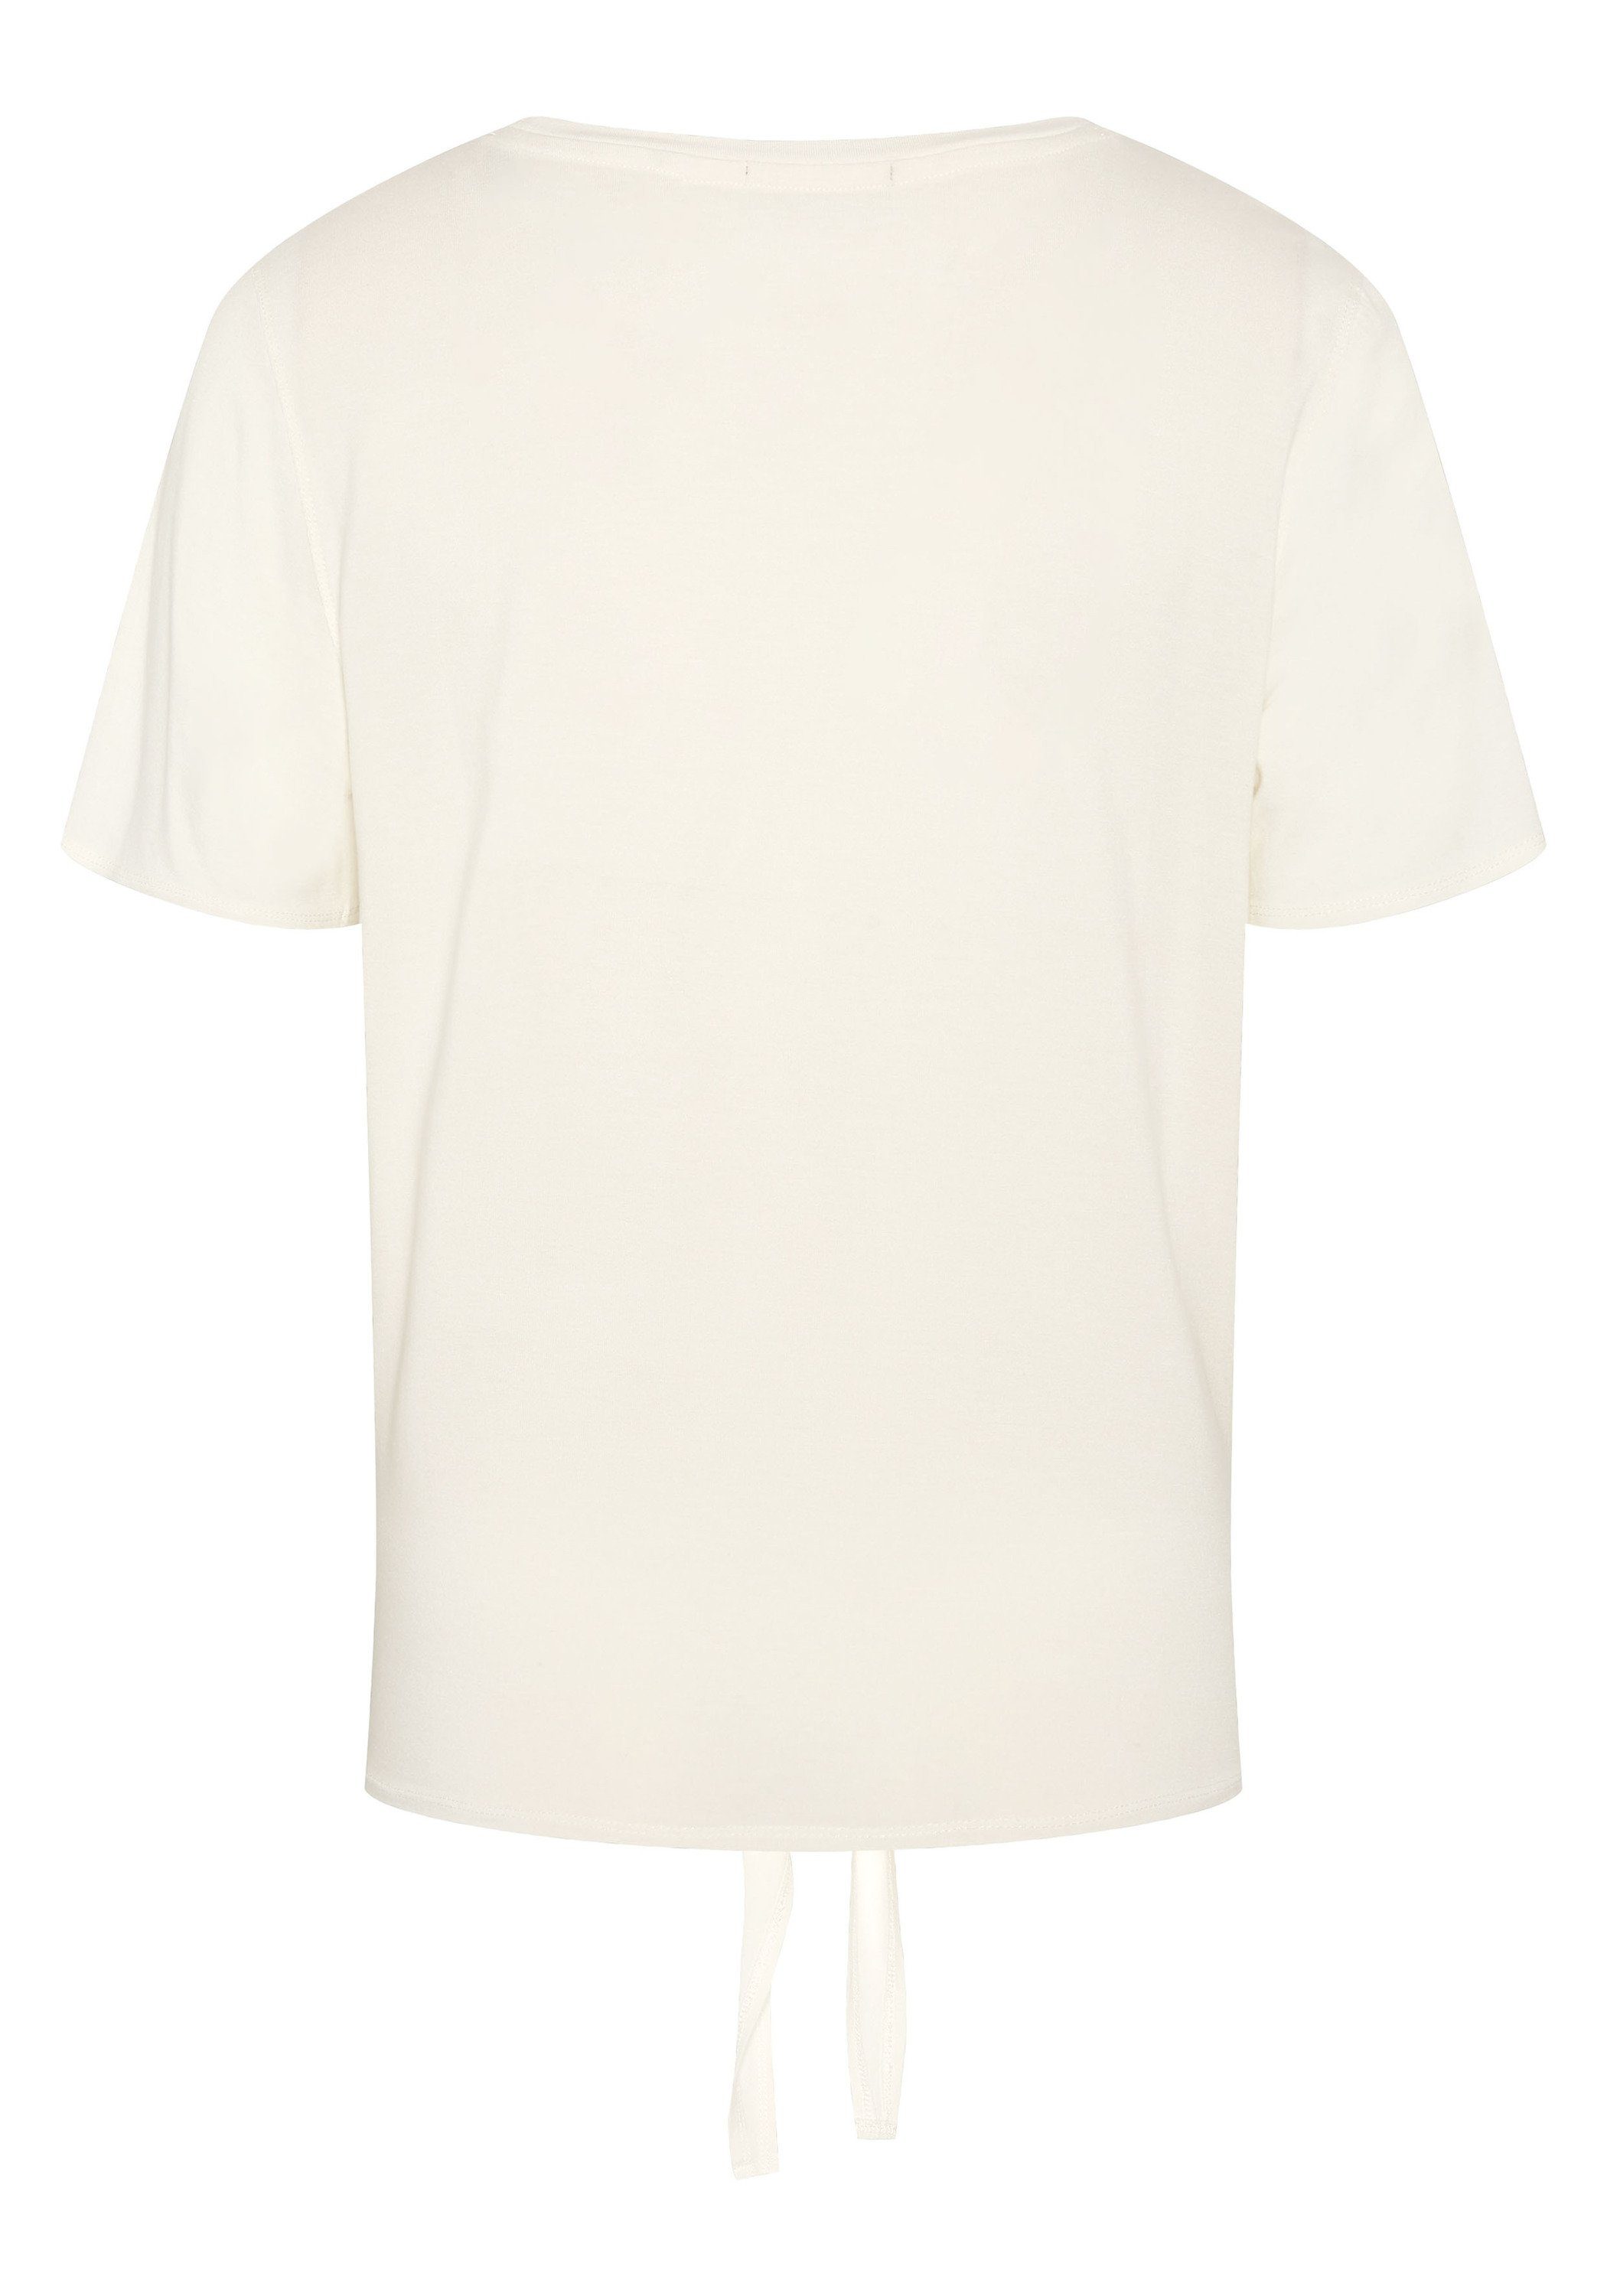 Chiemsee Print-Shirt gecropptes mit Star 1 11-4202 Knoten T-Shirt White zum Saum